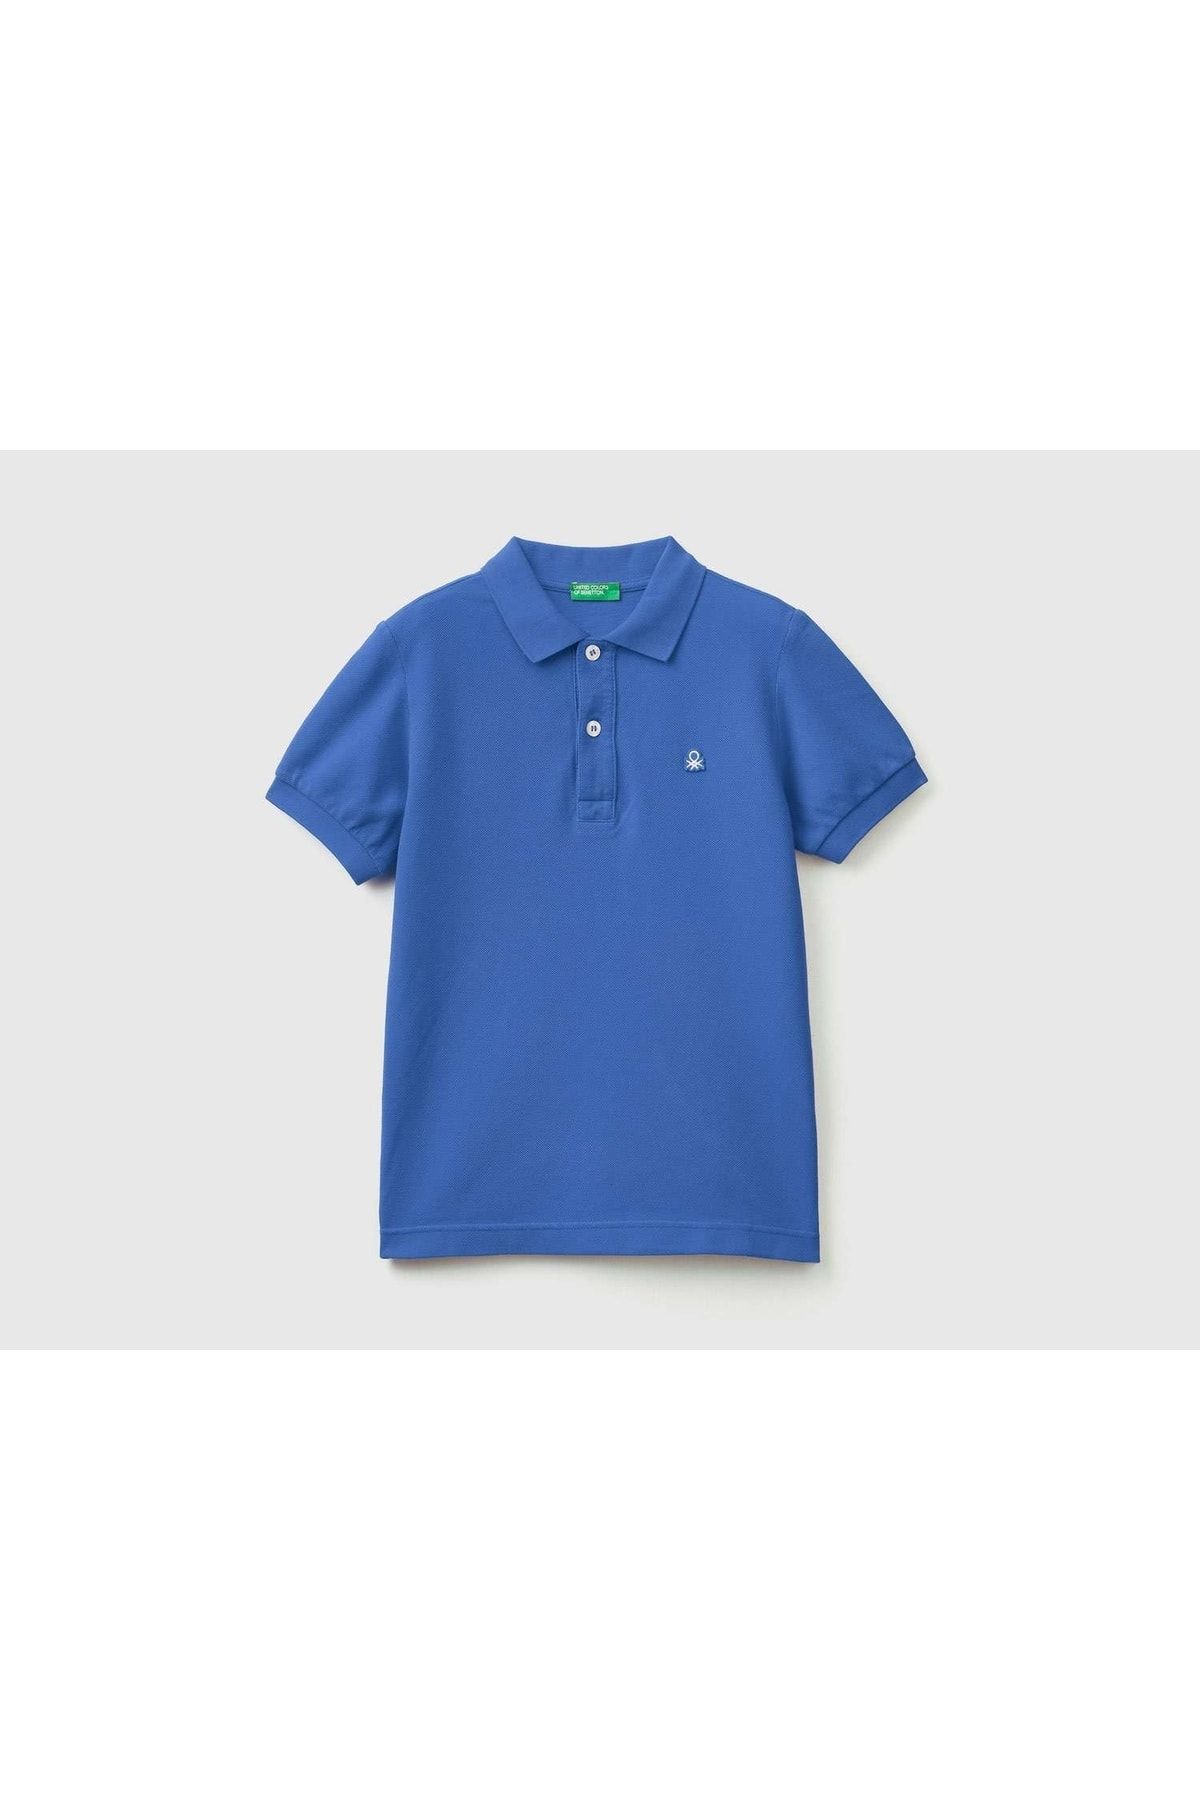 United Colors of Benetton Erkek Çocuk Mavi Logolu Polo T-shirt